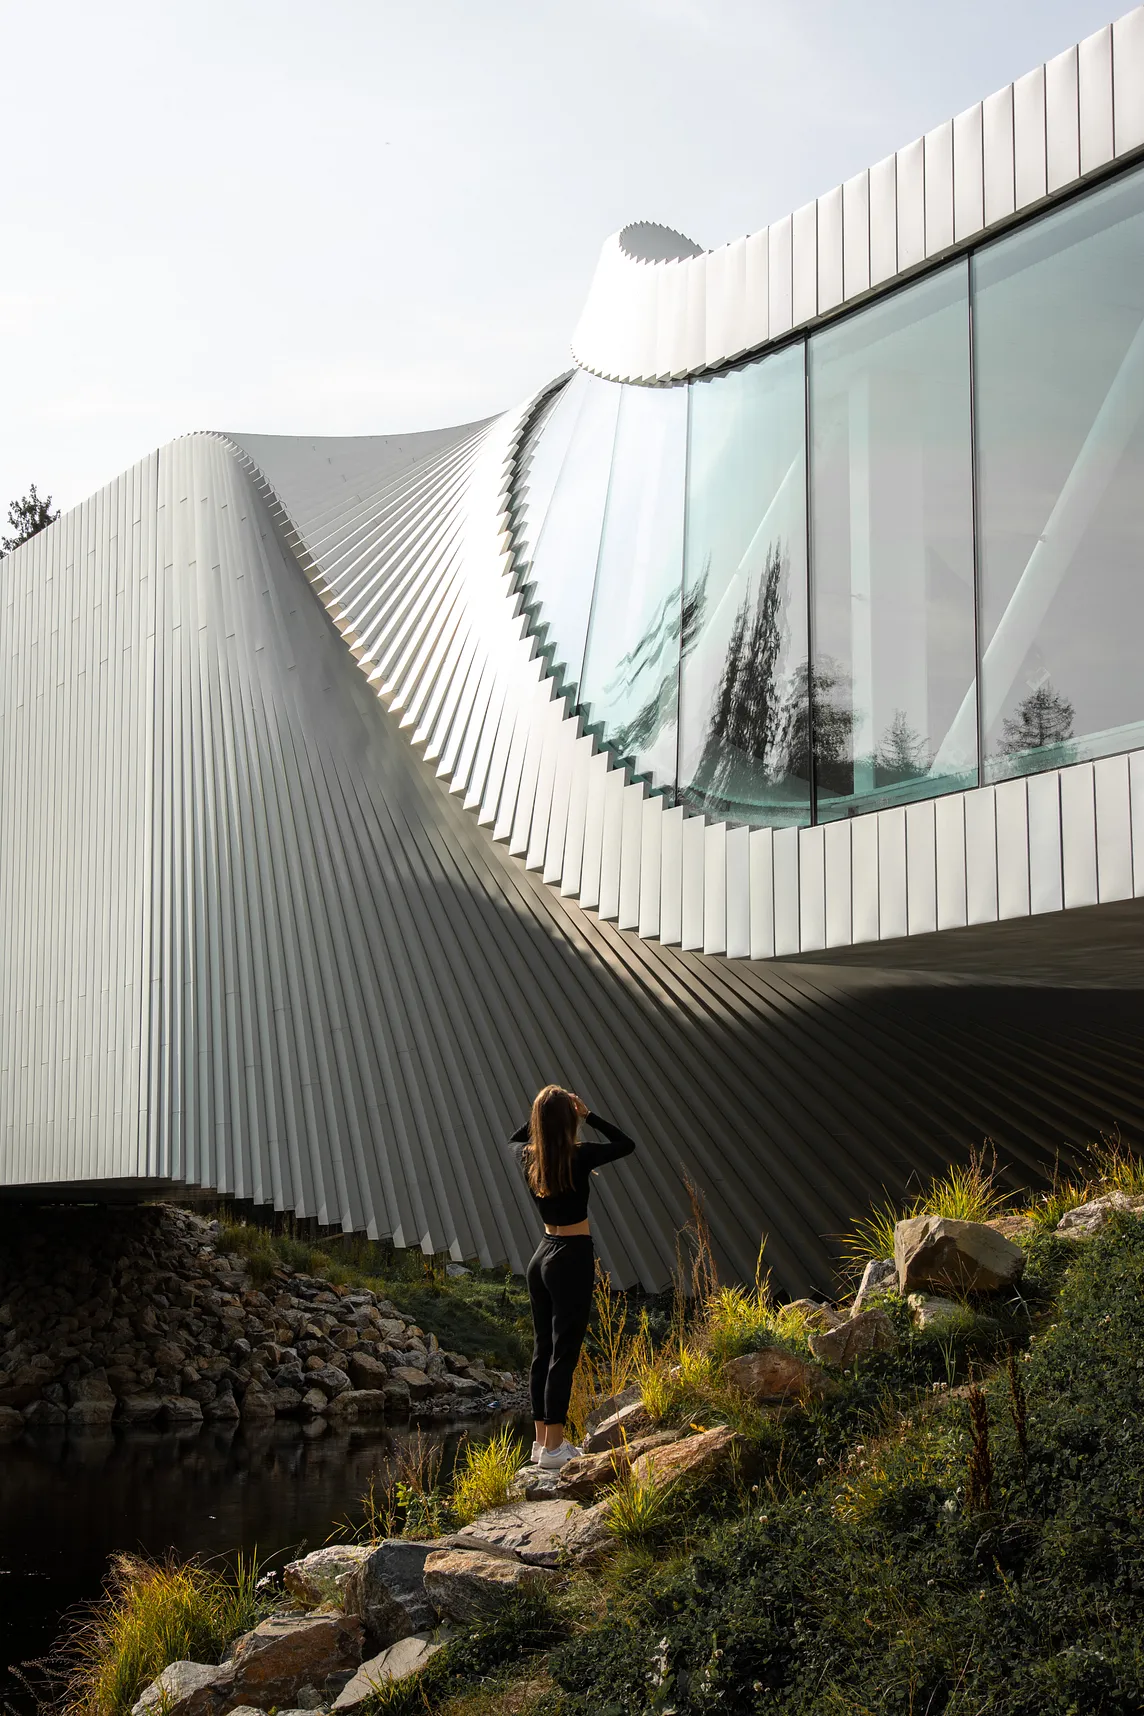 Kistefos Museum, “The Twist” in Norway